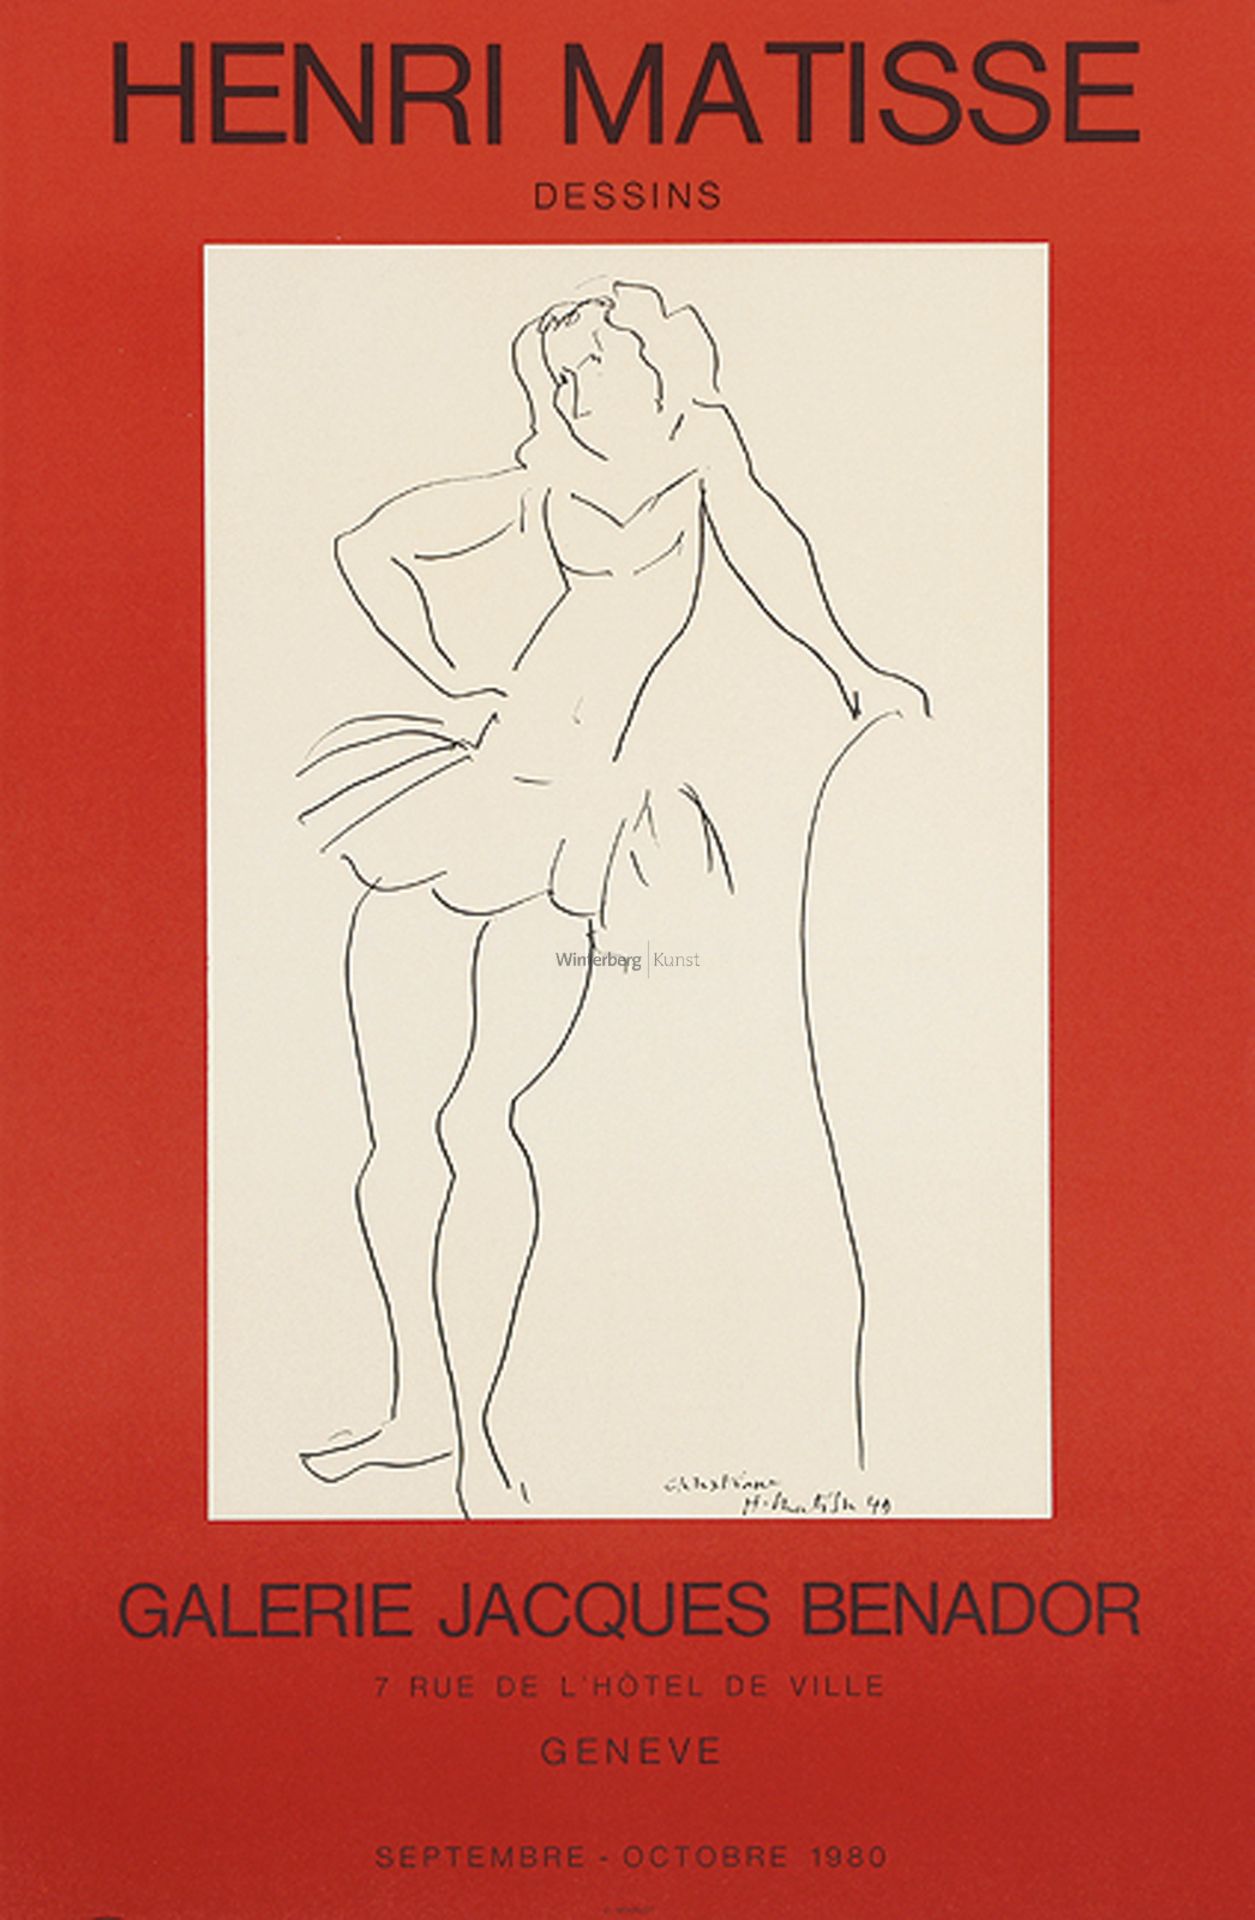 HENRI MATISSE: Henri Matisse Dessins.